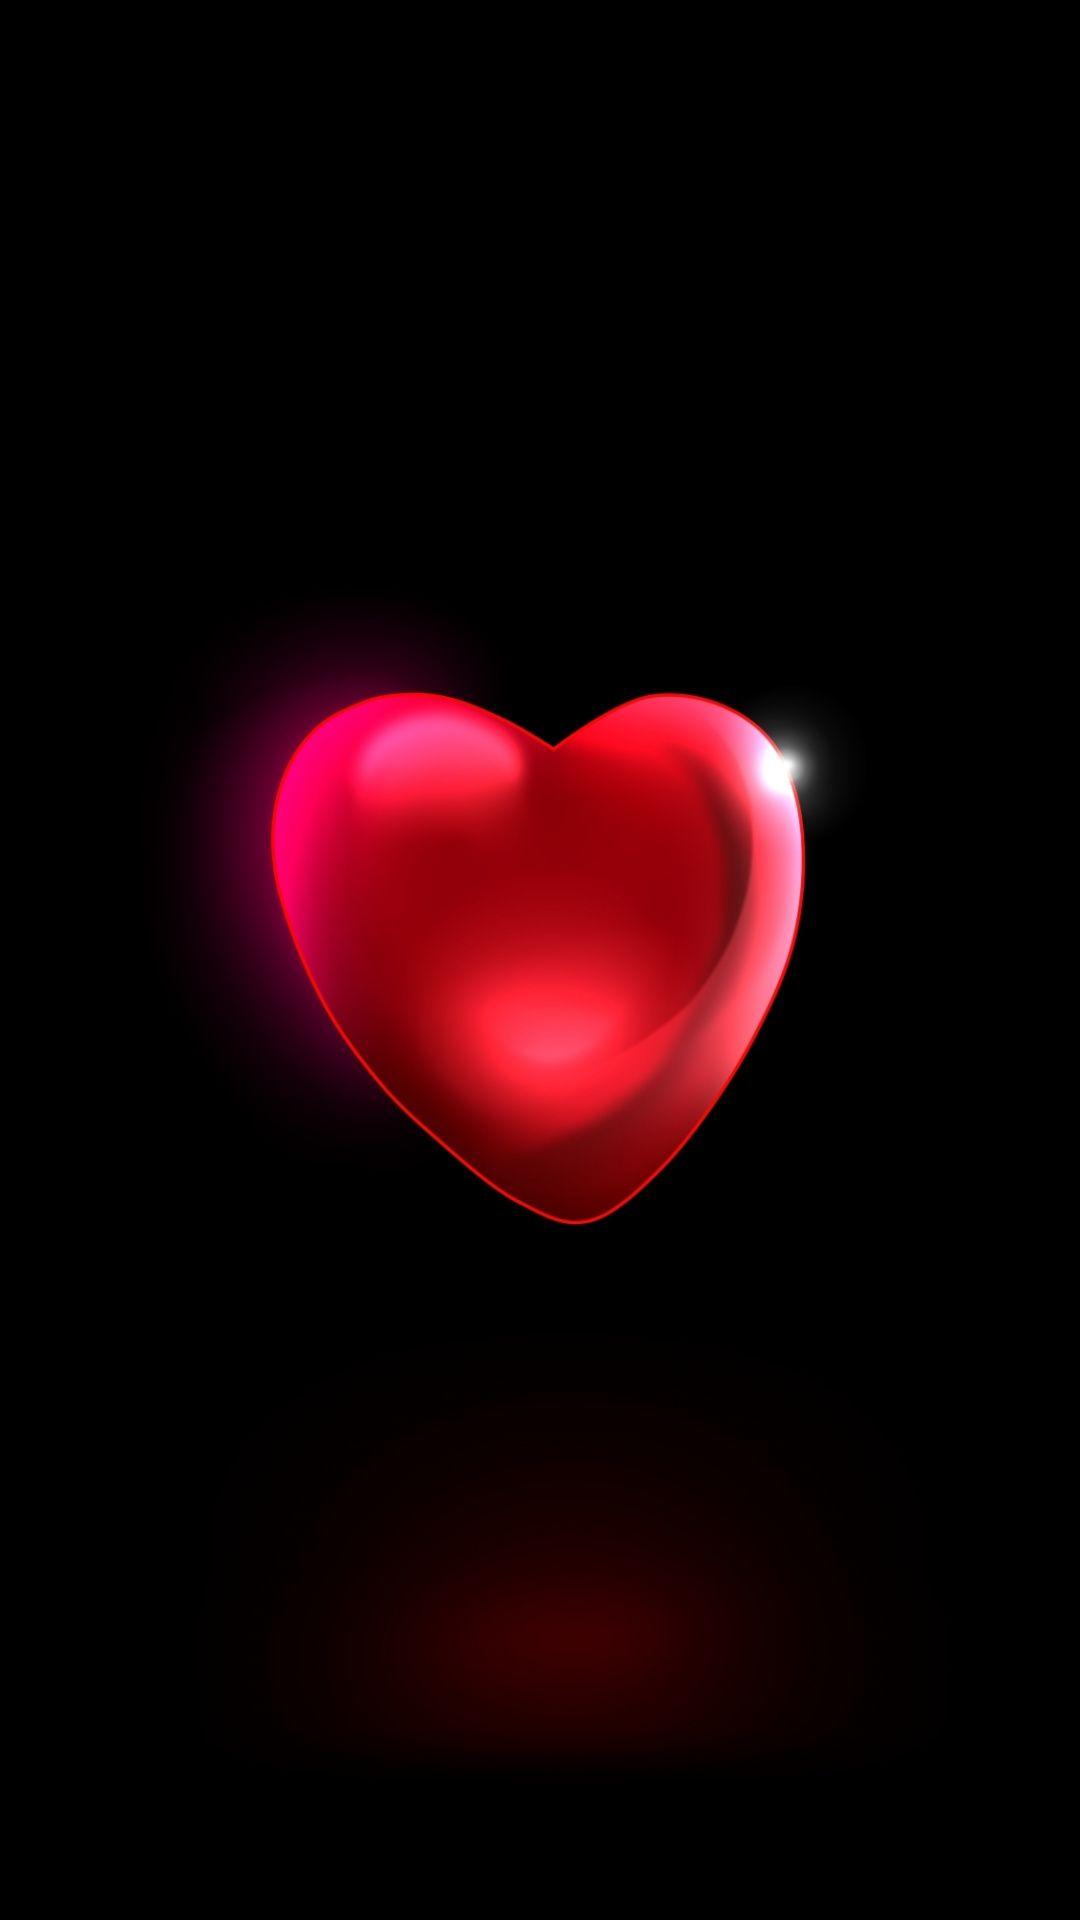 Minimal, red heart, 3D Wallpaper. iPhone background, Heart wallpaper